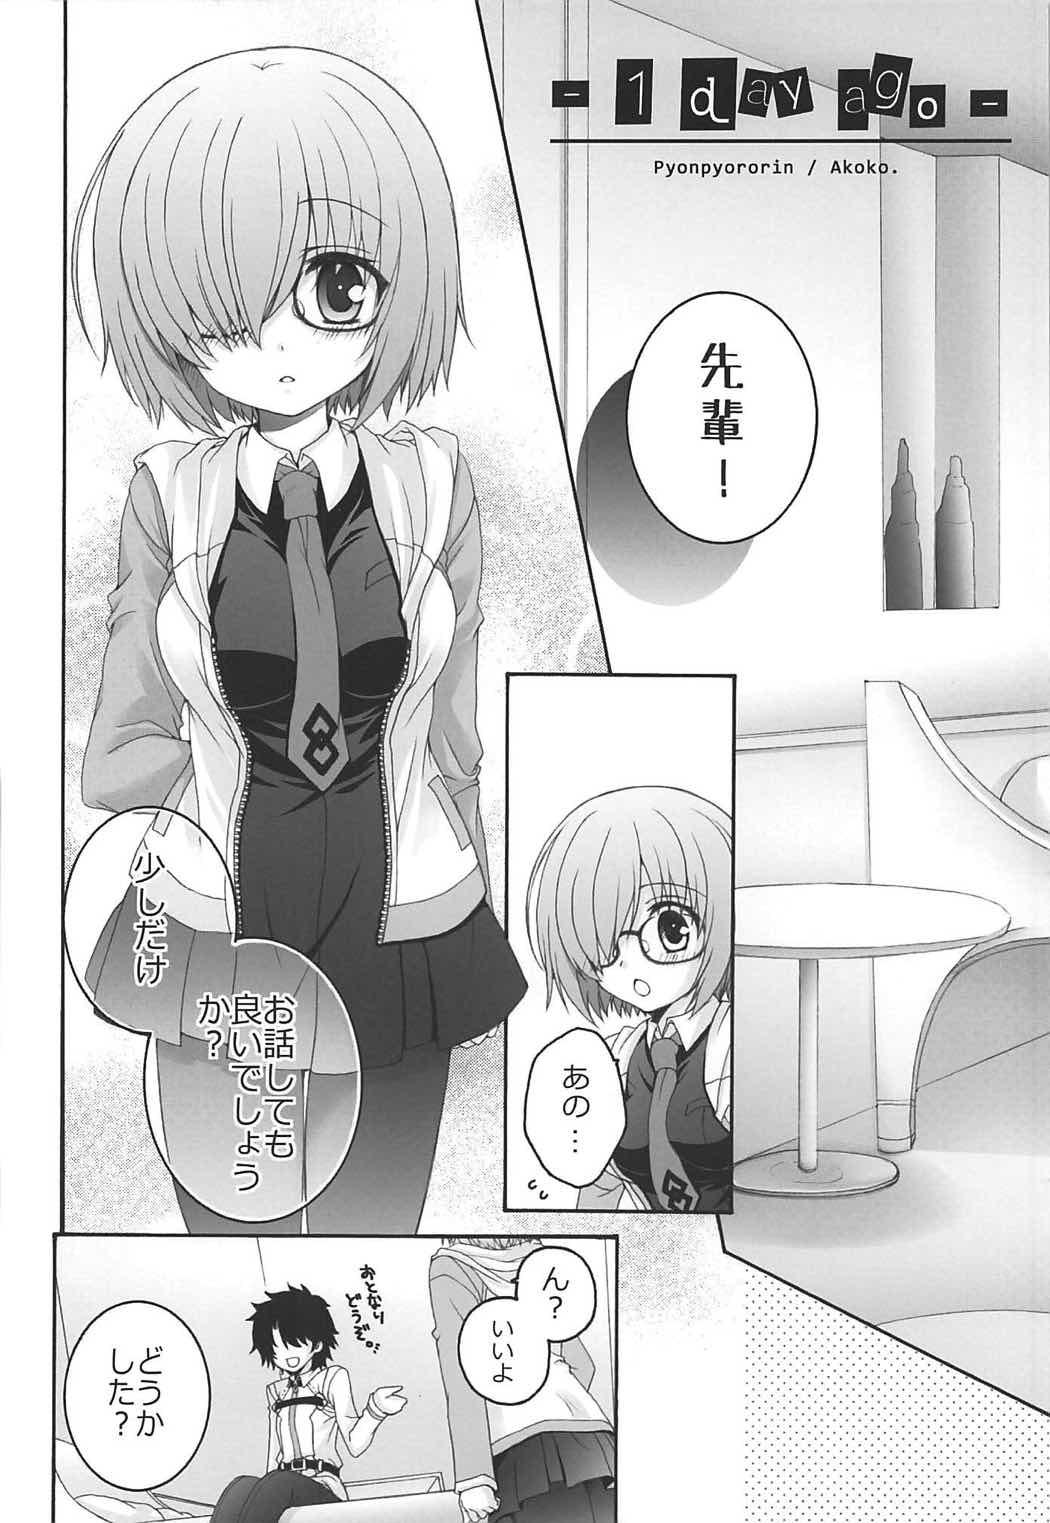 Brother Sister (COMIC1☆11) [Pyonpyororin (Akoko.)] - 1 day ago - (Fate/Grand Order) - Fate grand order Publico - Page 5